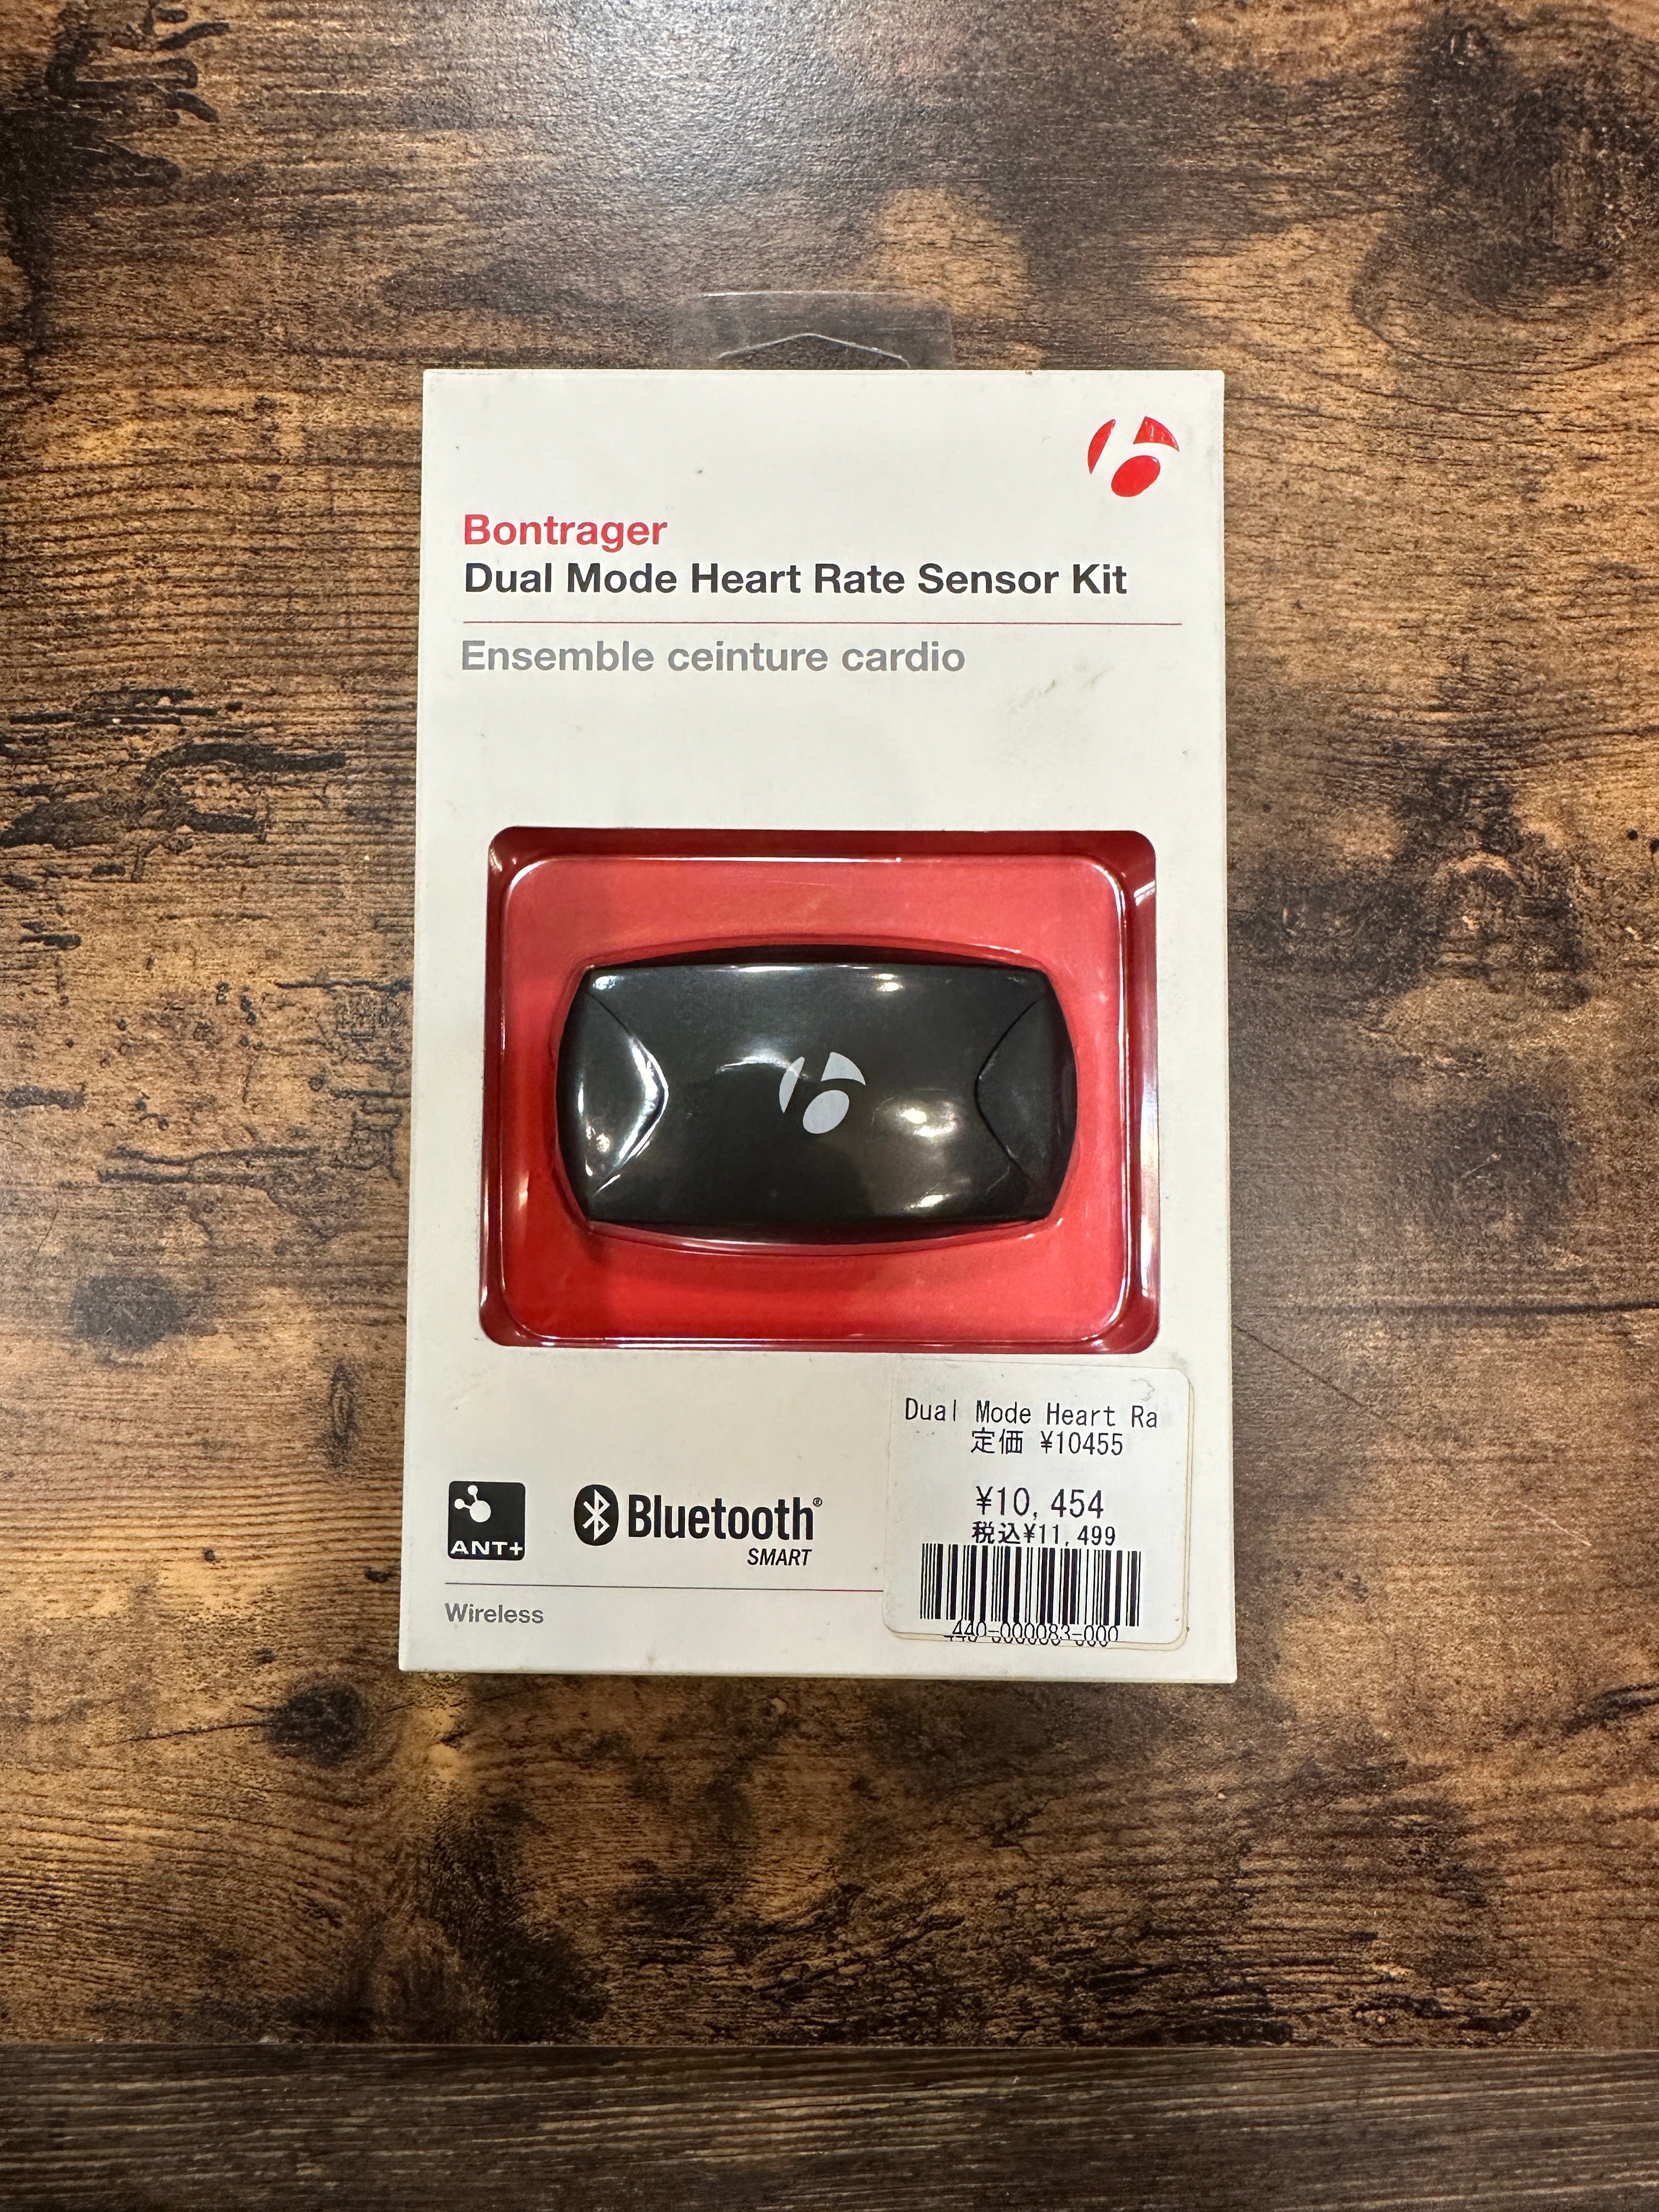 Bontrager| ハートレートセンサーキット「Dual Mode Heart Rate Sensor Kit」 – レジャーハウスミヤザキ